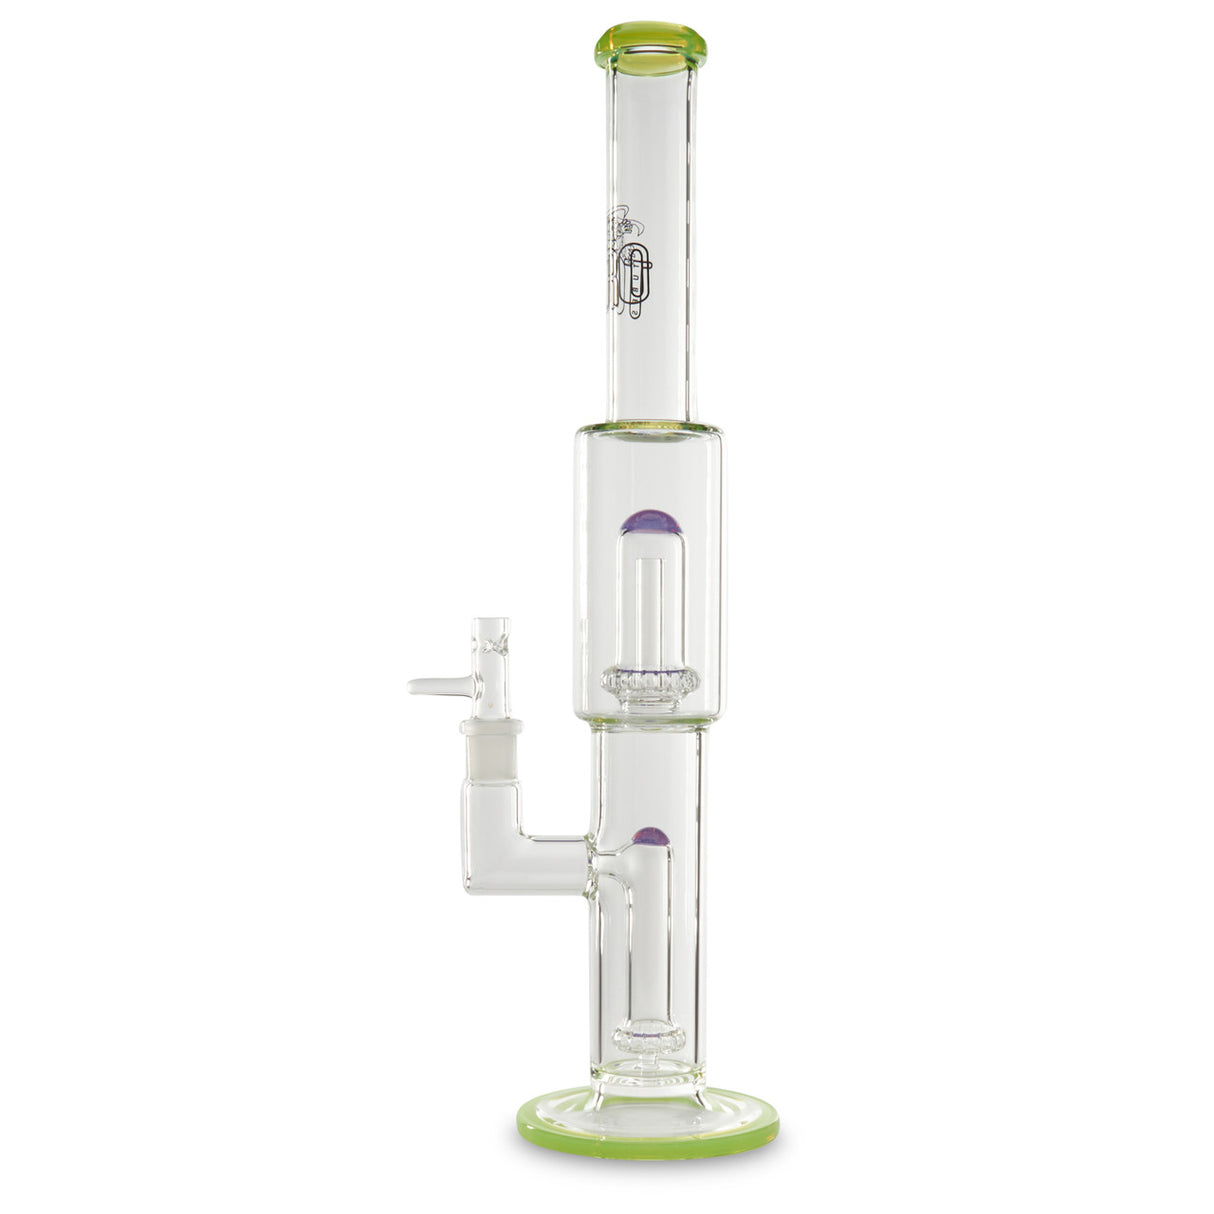 toro glass showerhead to showerhead green slyme and wysteria tube